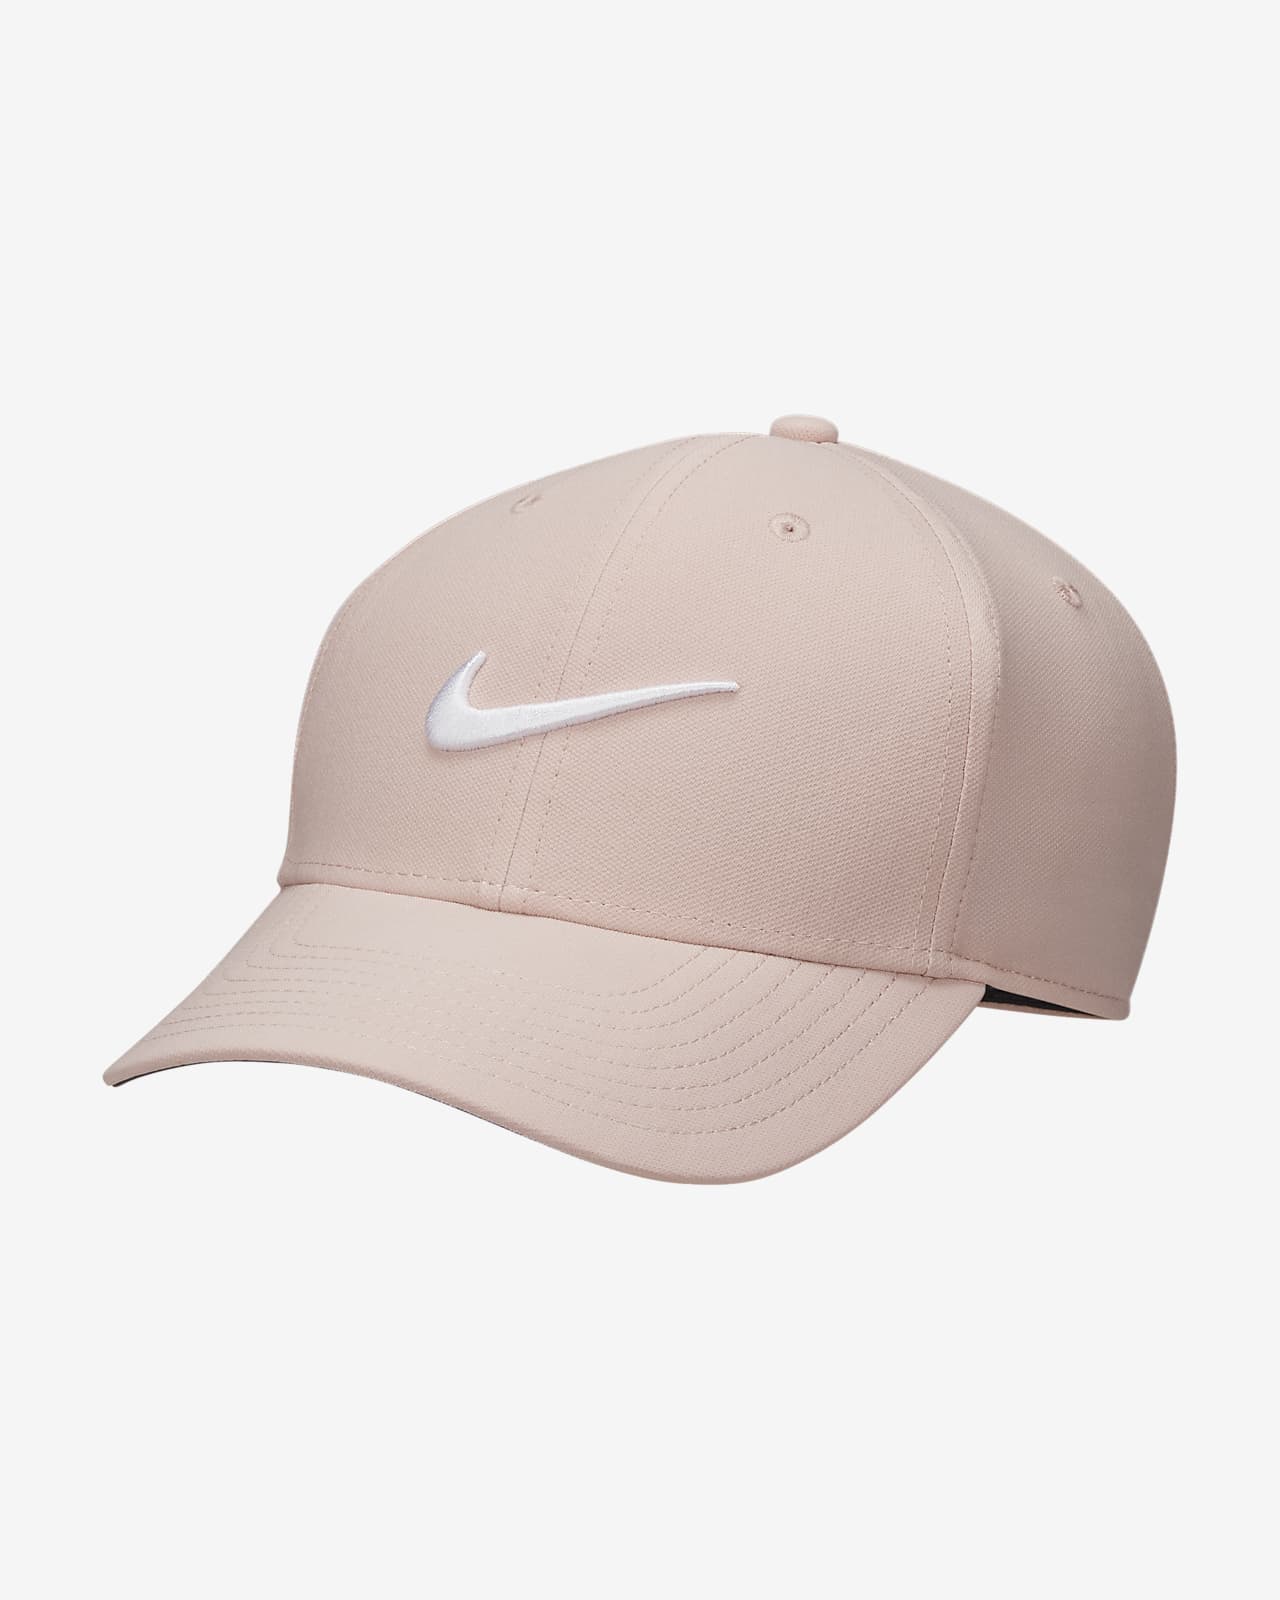 Nike Cap.